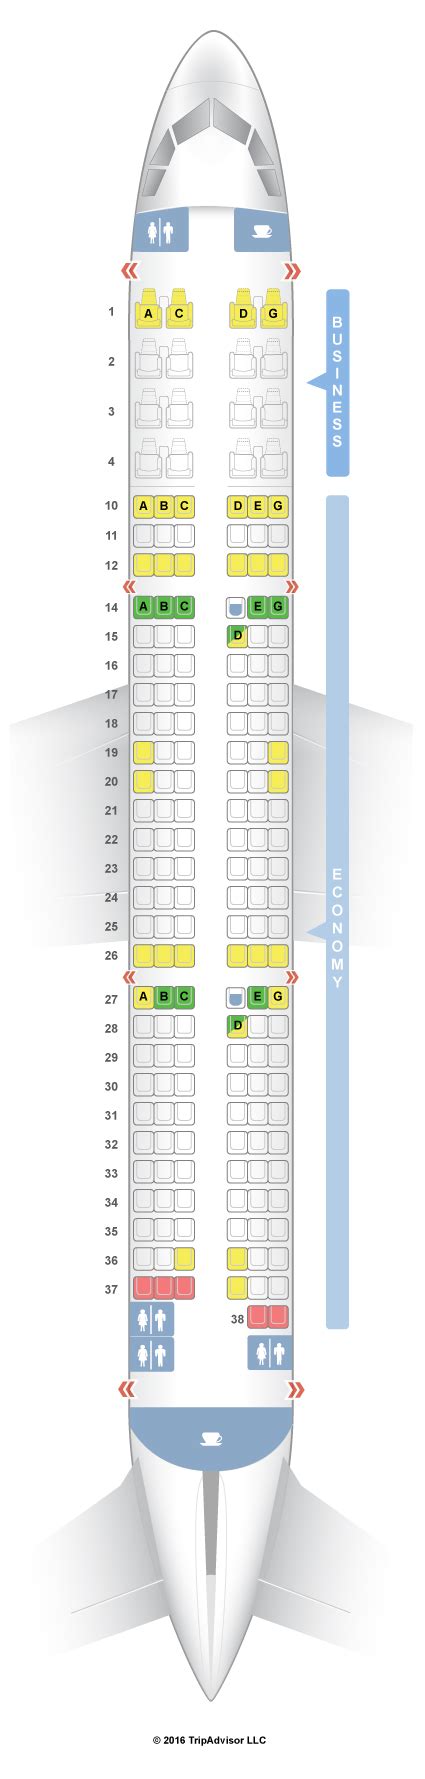 Jetblue Seating Chart A321